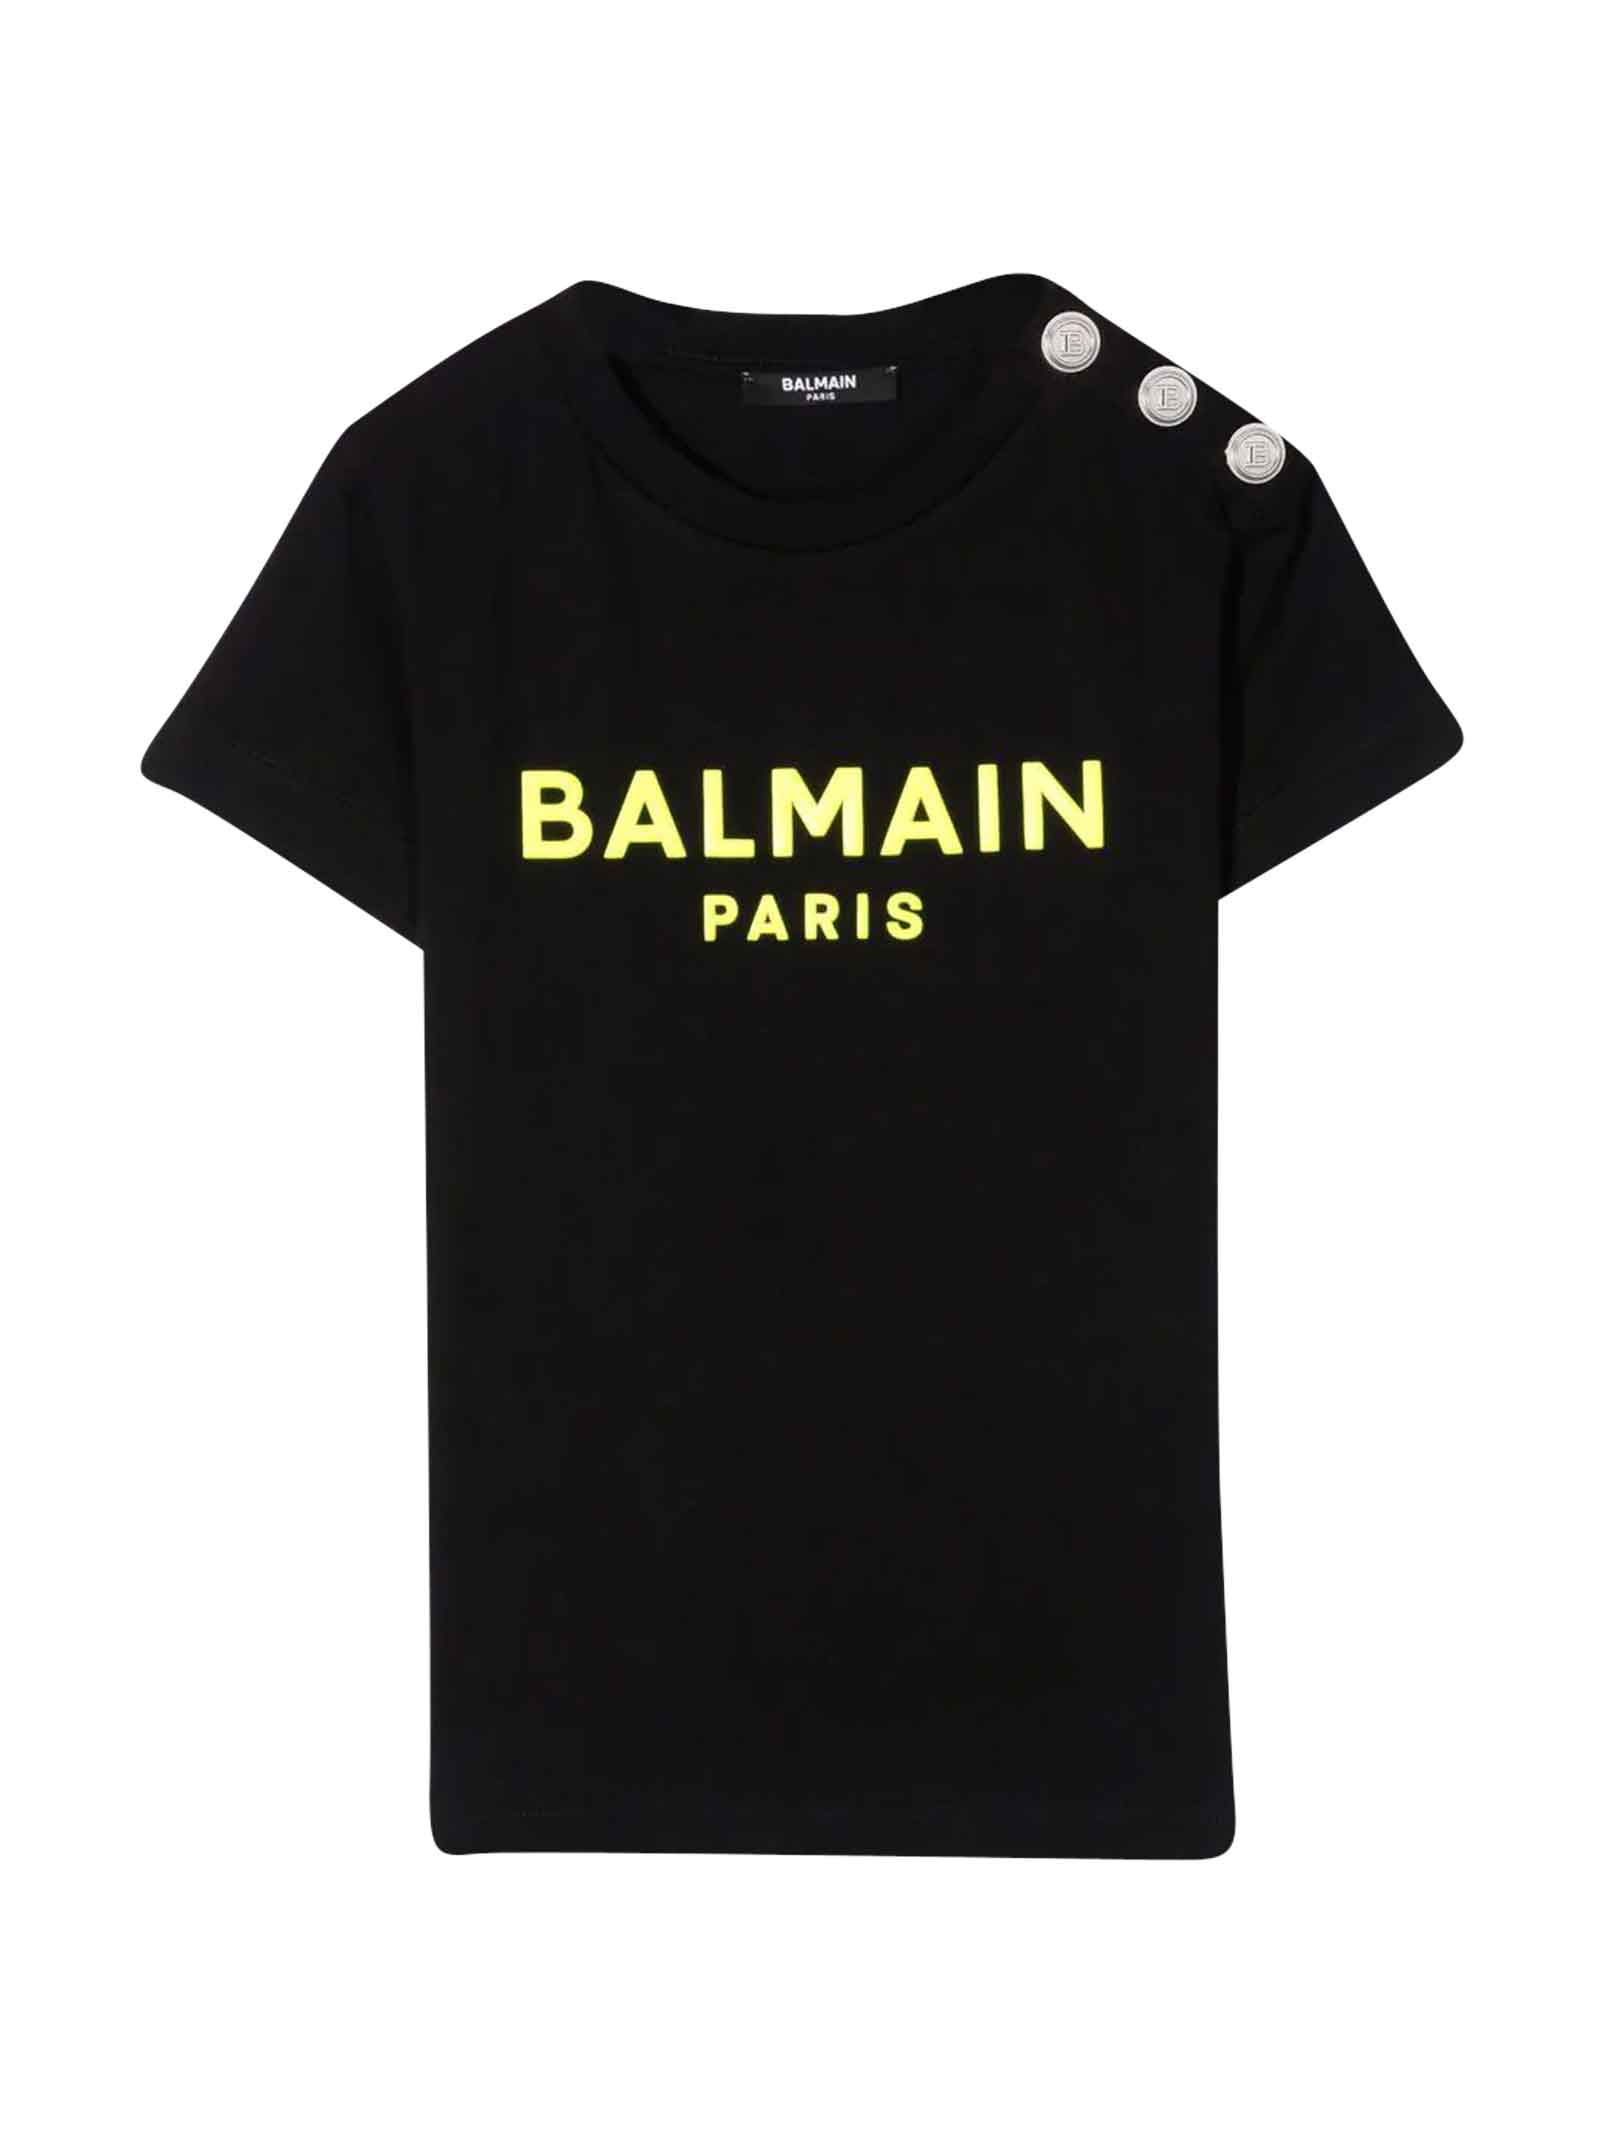 Balmain Black T-shirt With Yellow Print